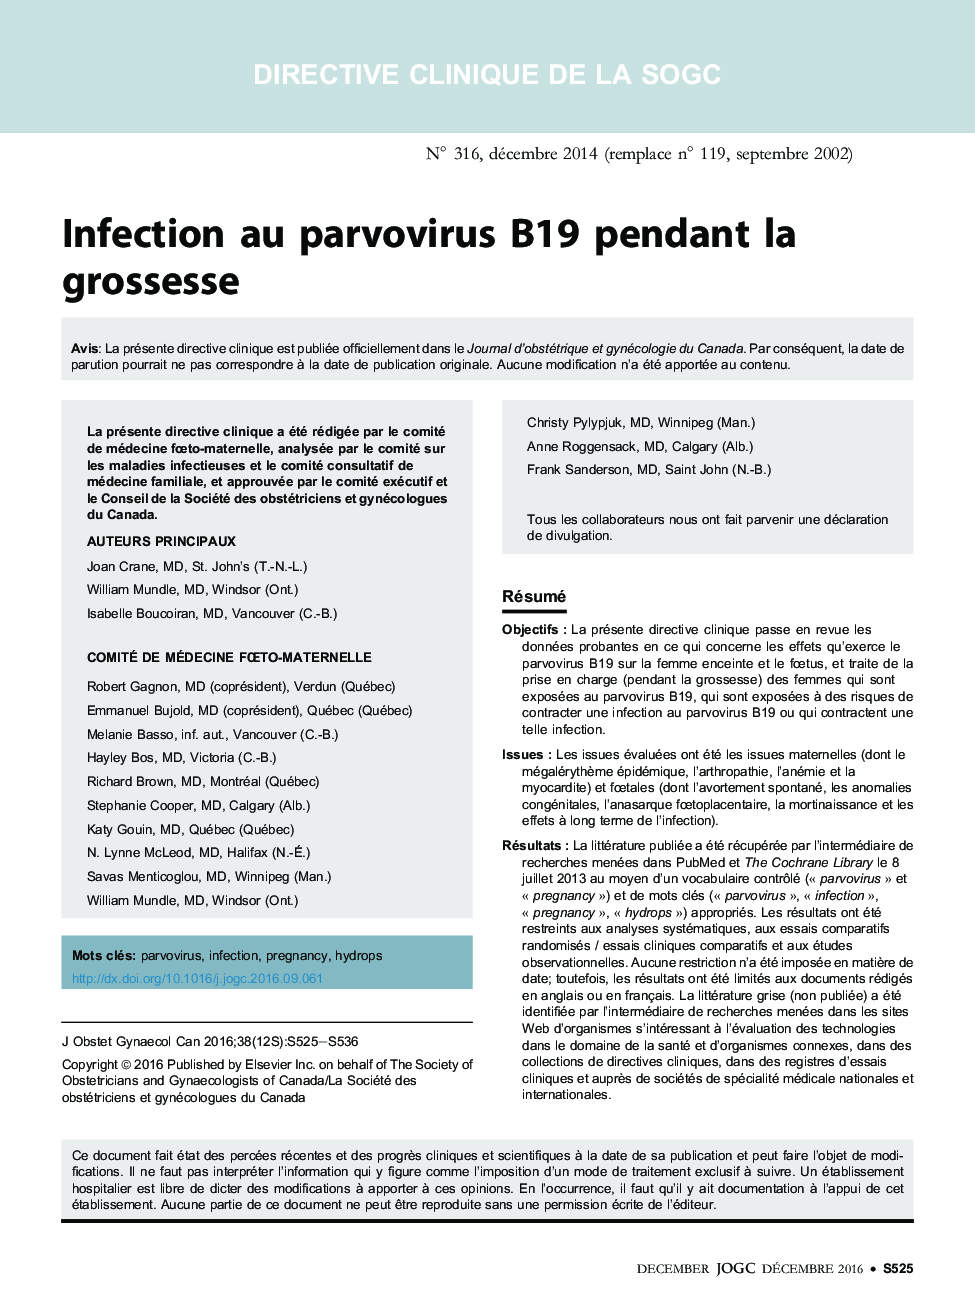 Infection au parvovirus B19 pendant la grossesse